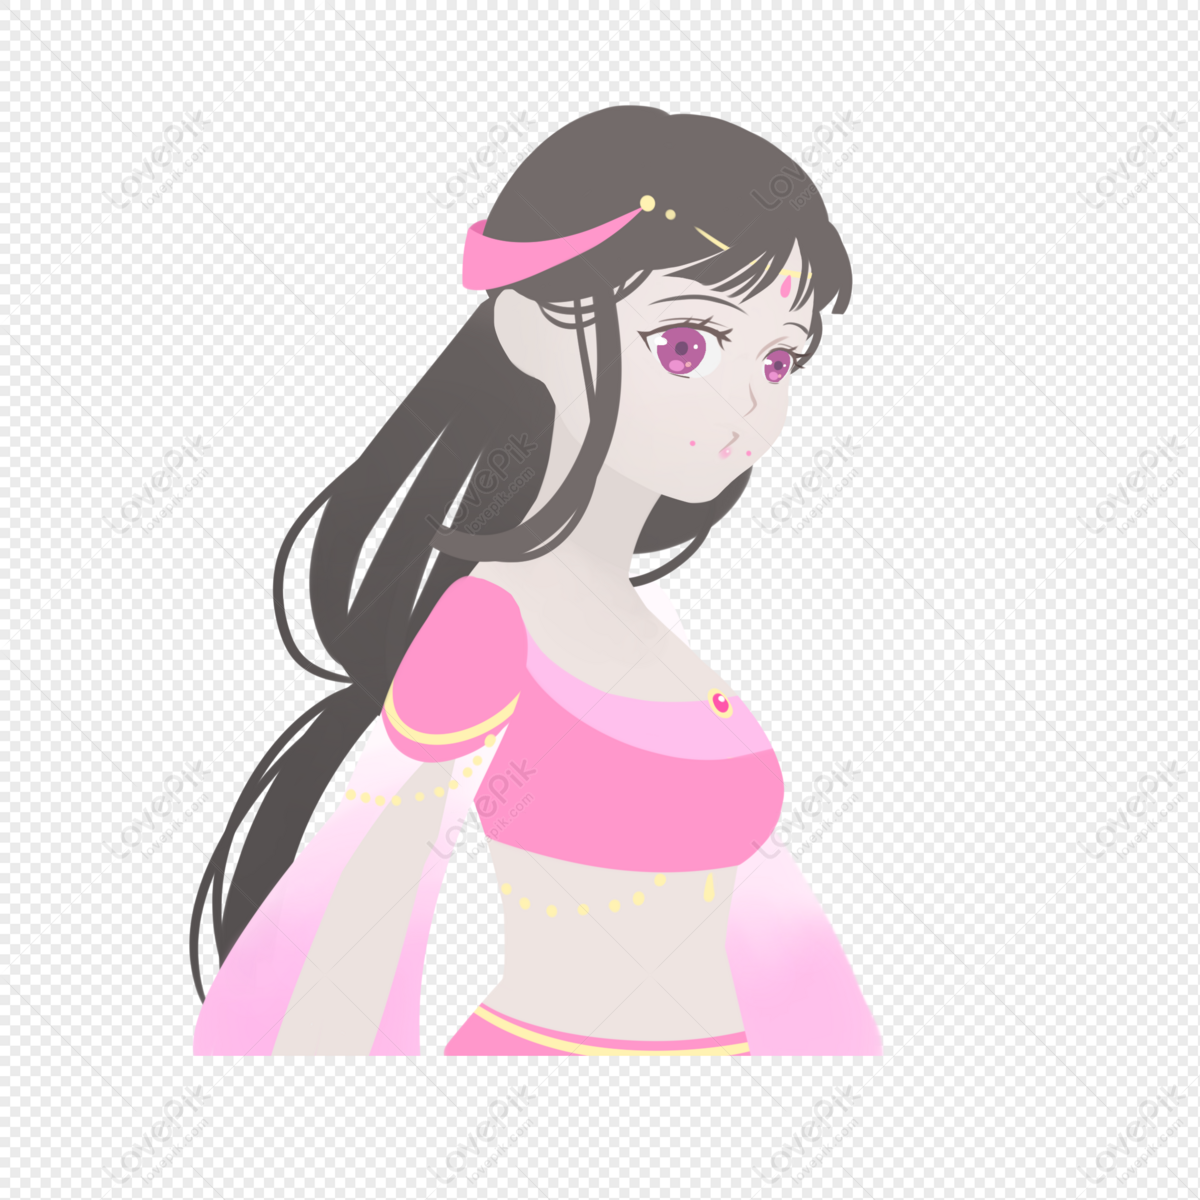 Rachael - Laker Girl Costume, HD Png Download - 450x726 (#4862951) - PinPng